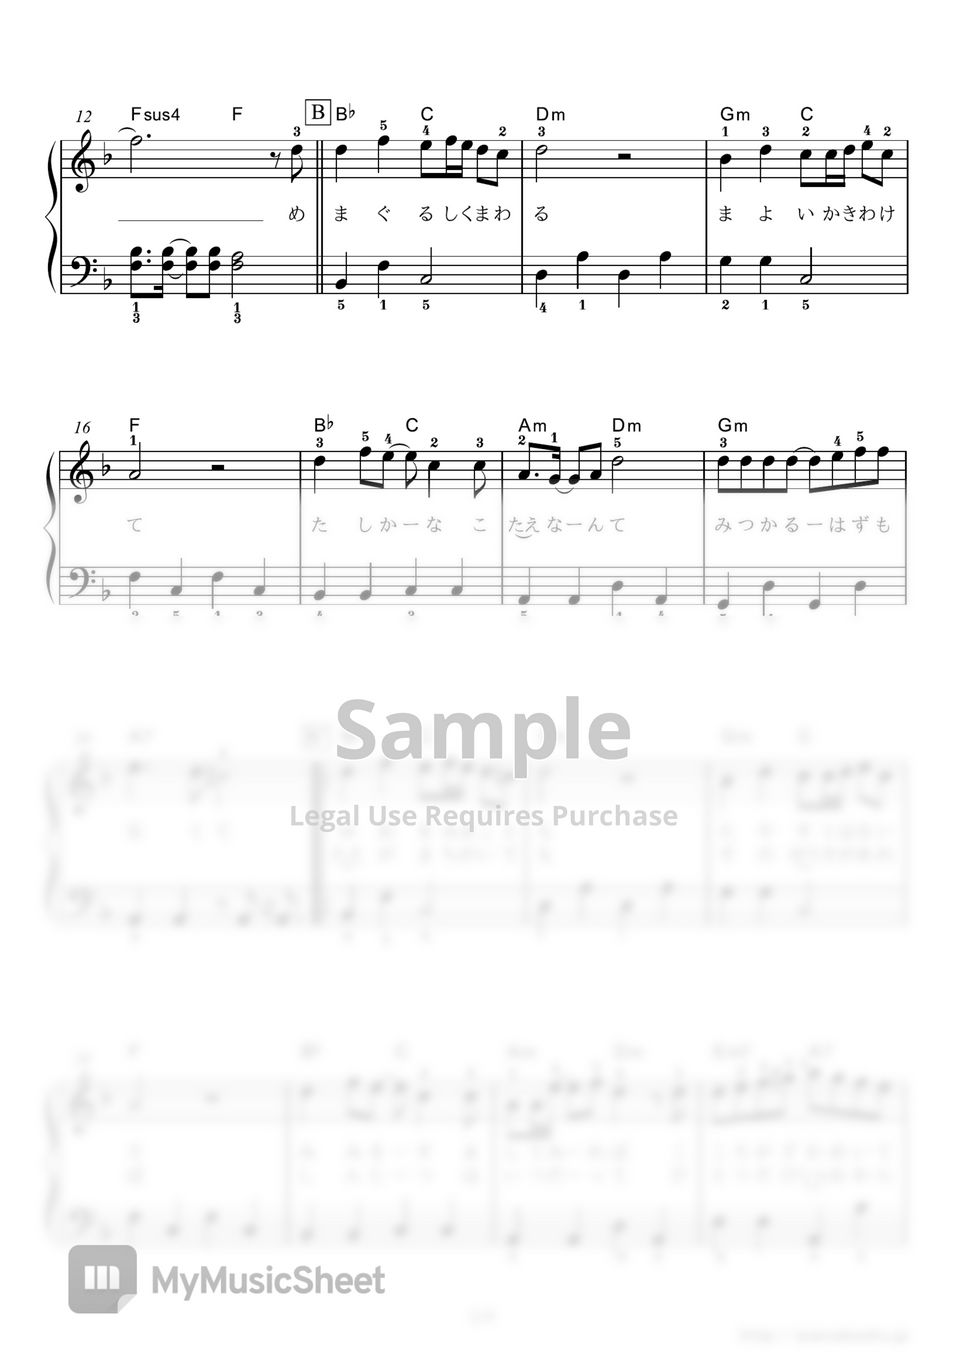 Arashi - GUTS! by PianoBooks